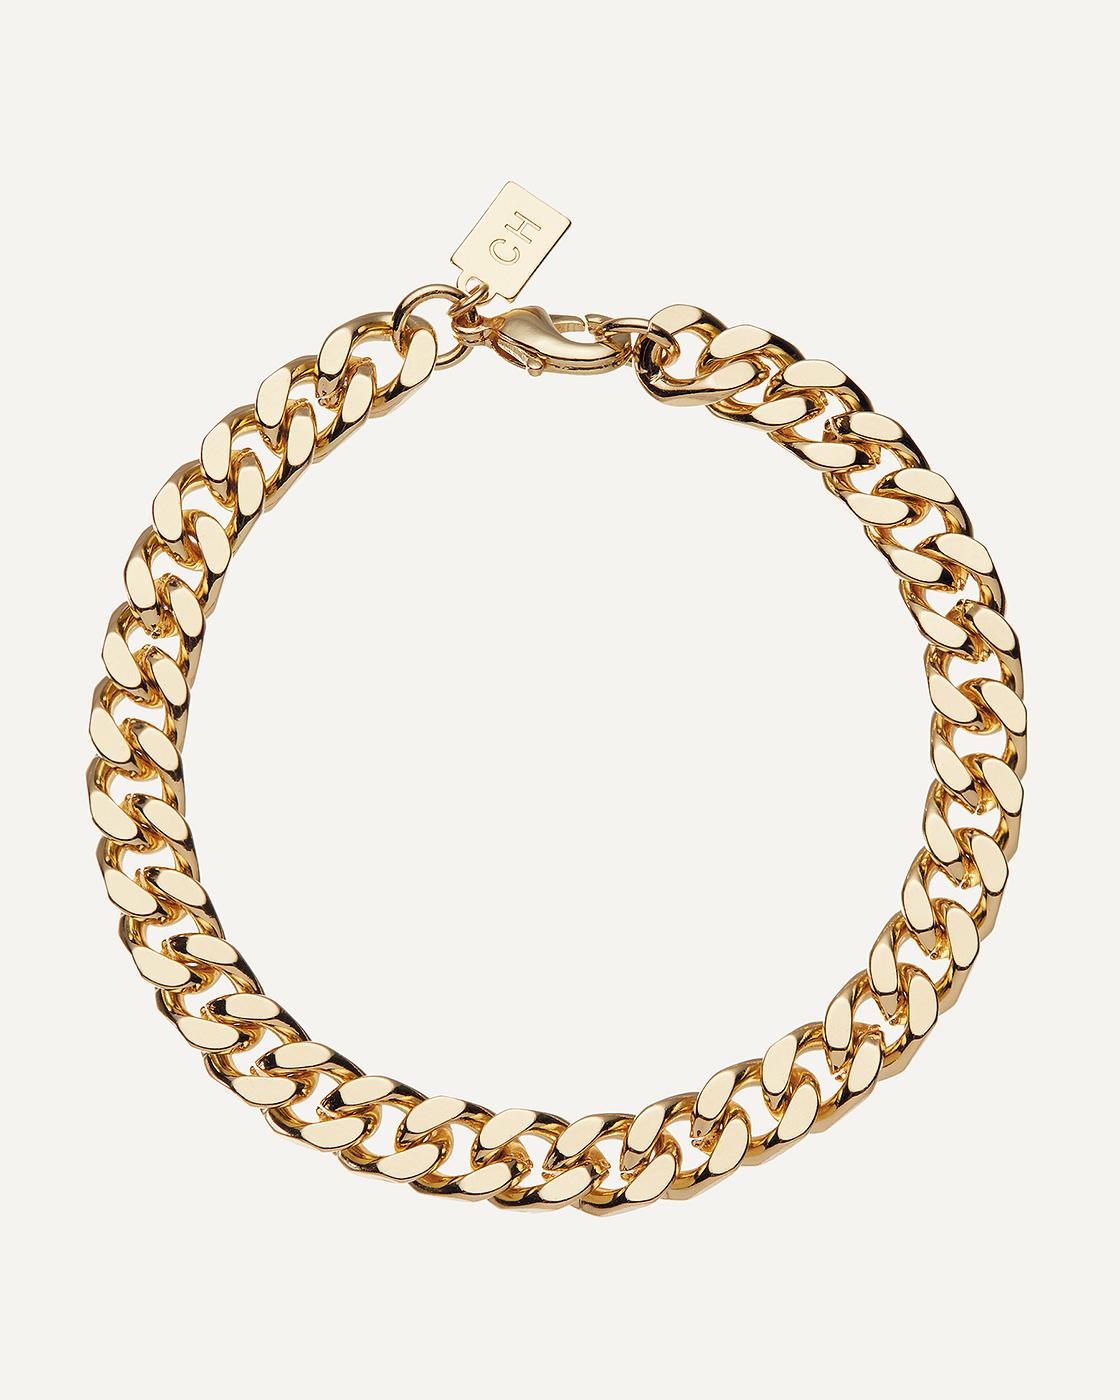 Plain Jane Gold-Plated Bracelet